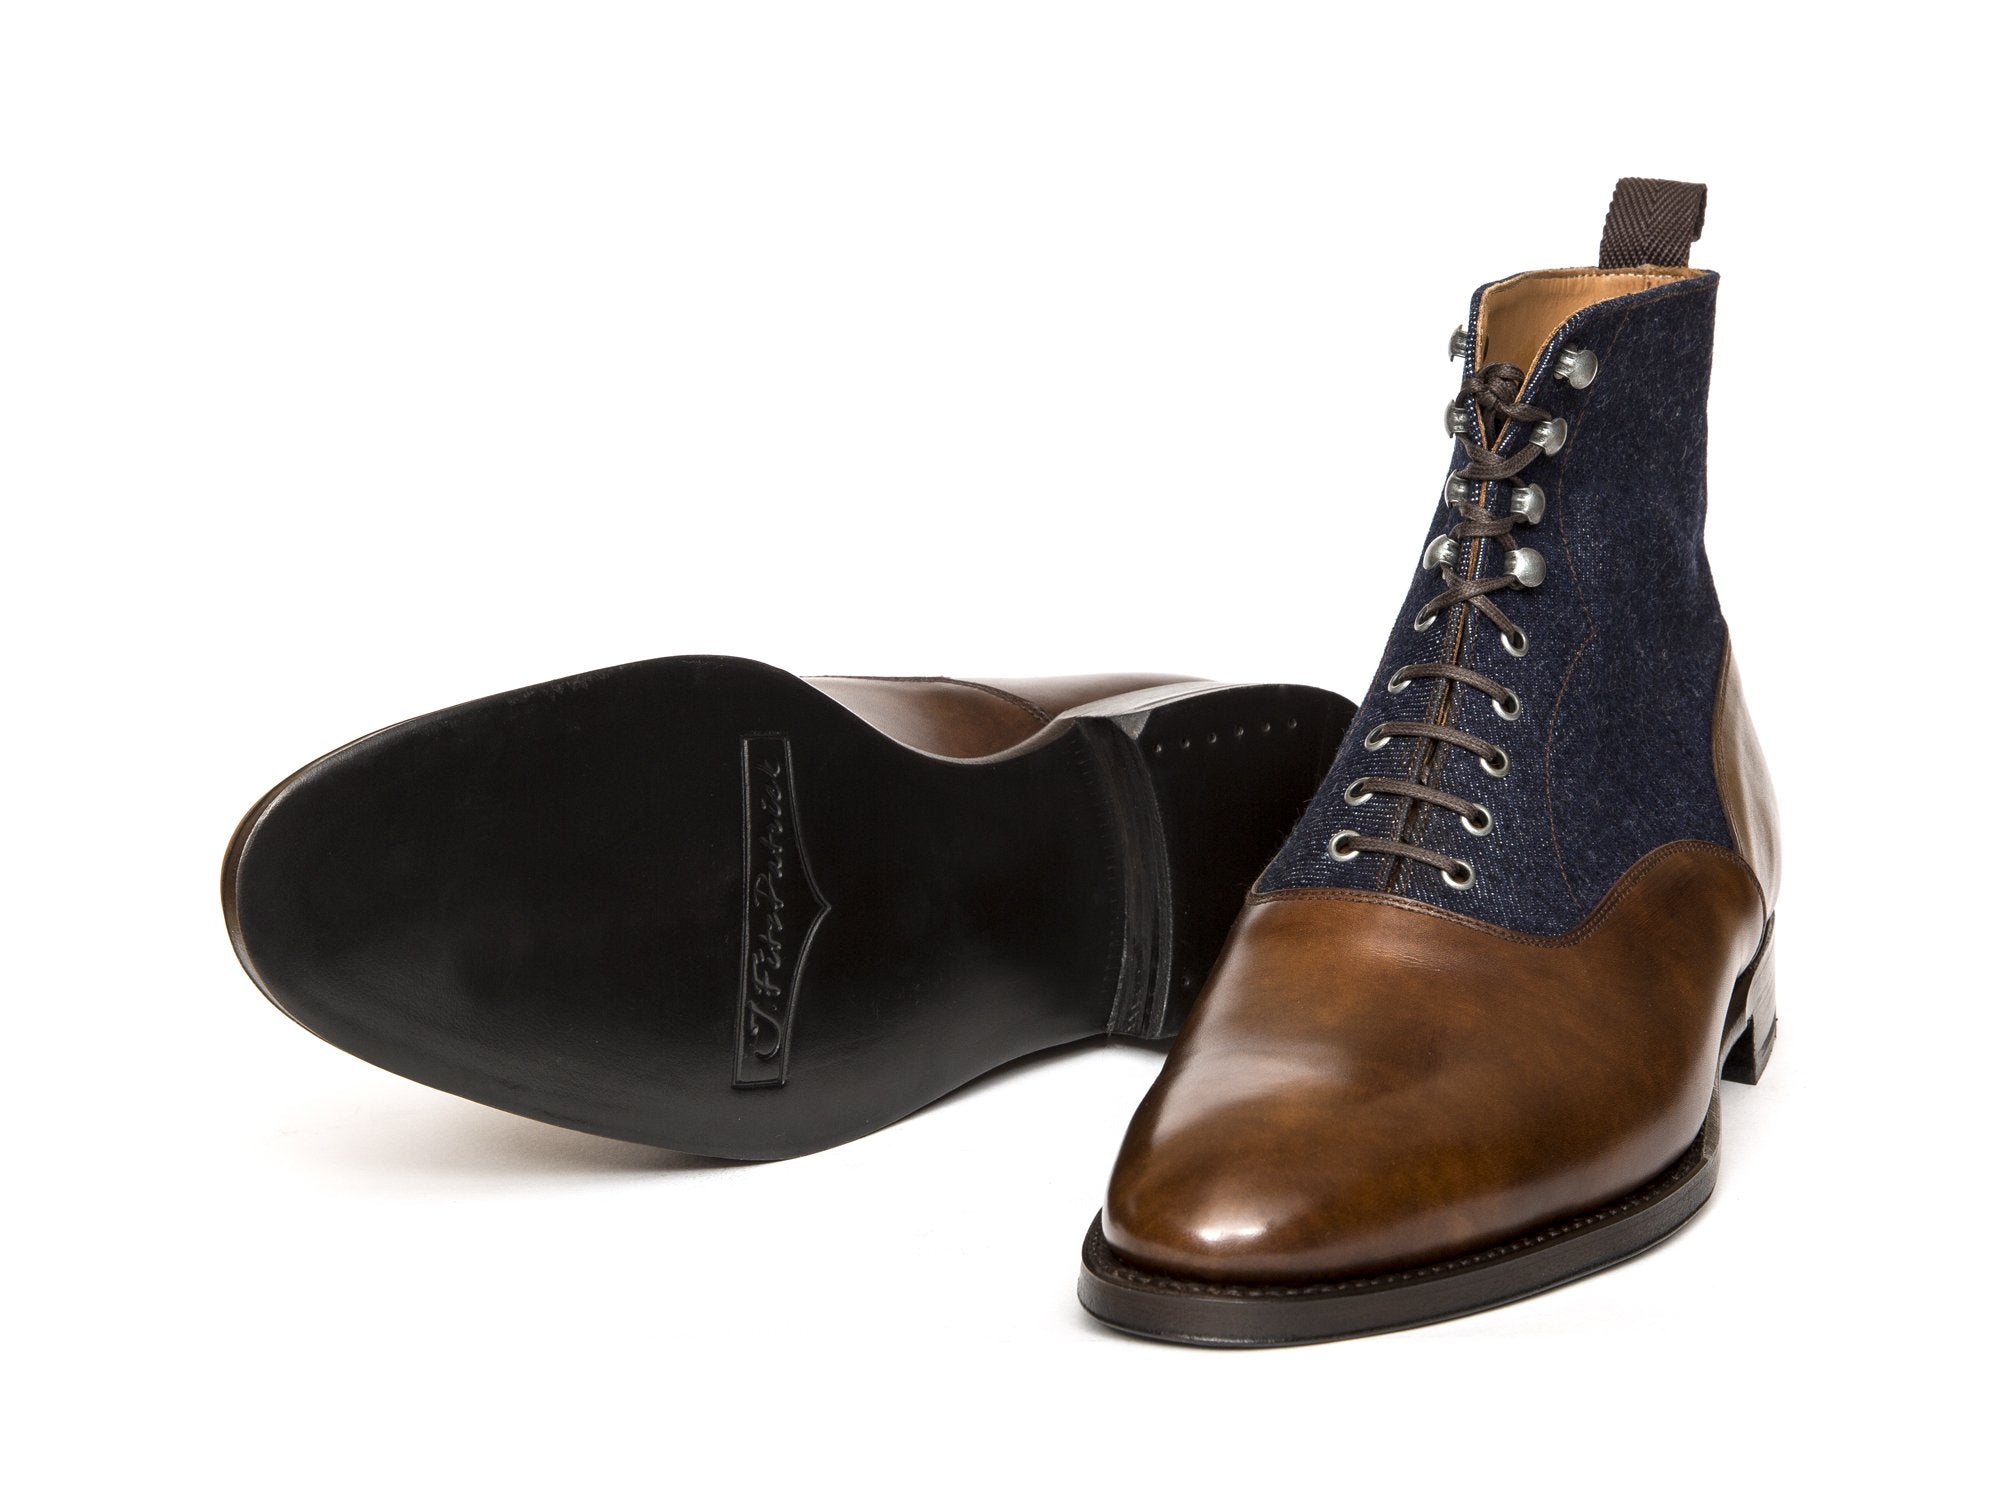 J.FitzPatrick Footwear - Wedgwood - Copper Museum Calf / Denim - TMG Last